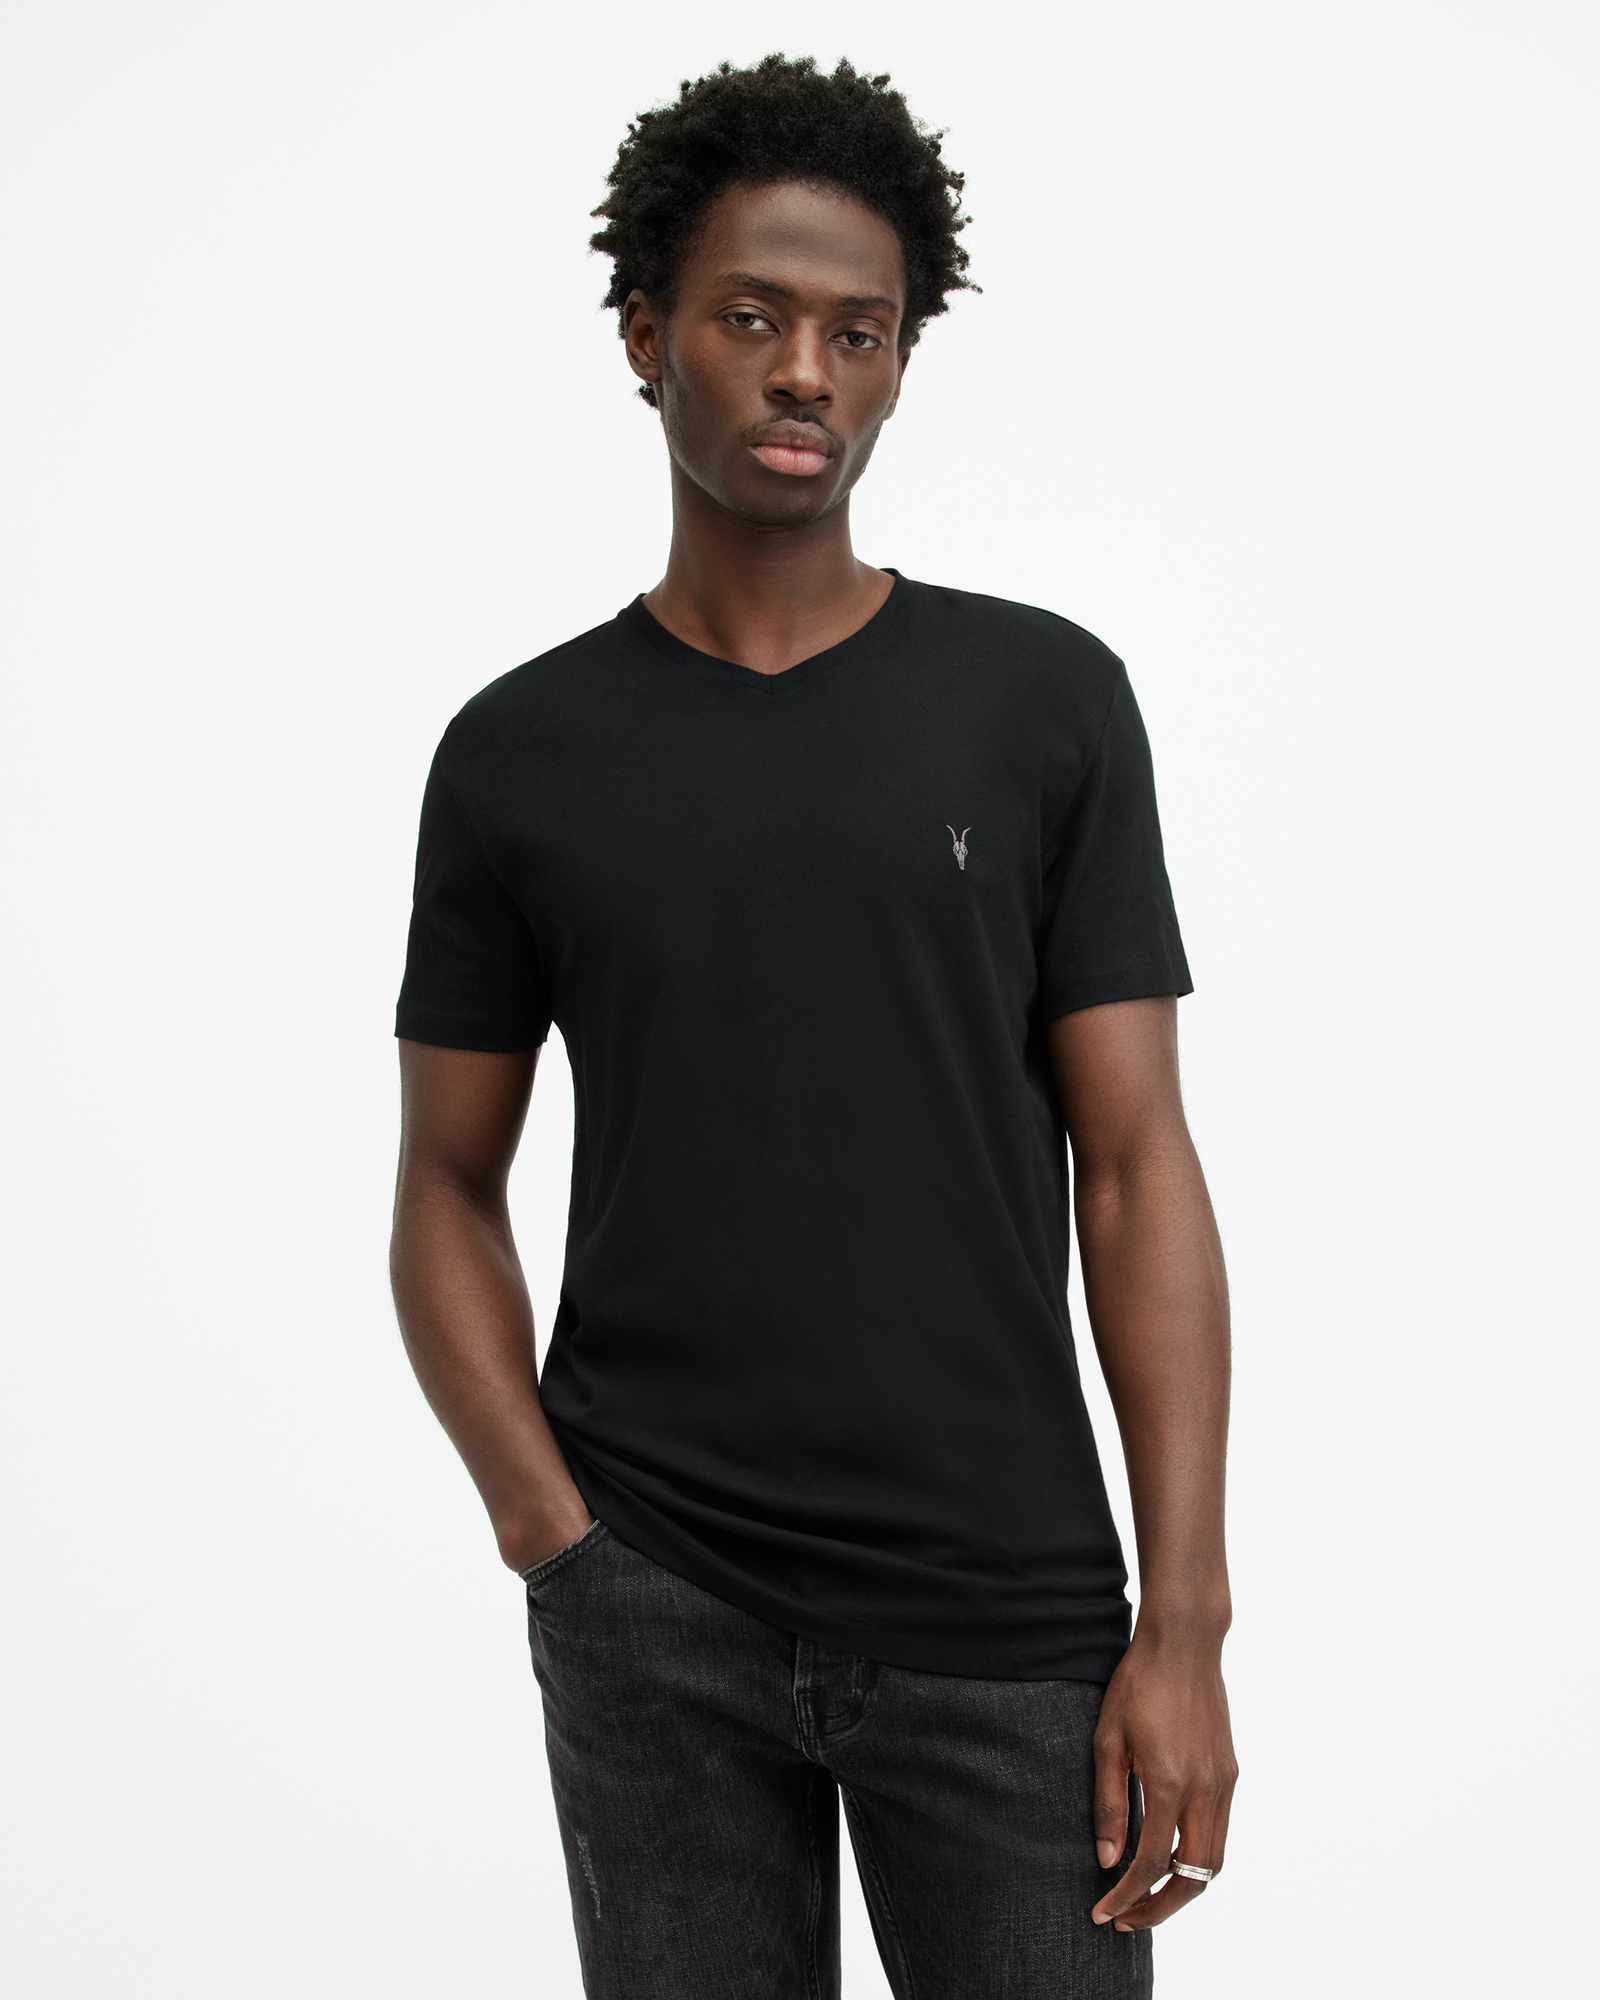 AllSaints Men's Lightweight Tonic V-Neck T-Shirt, Black, Size: M